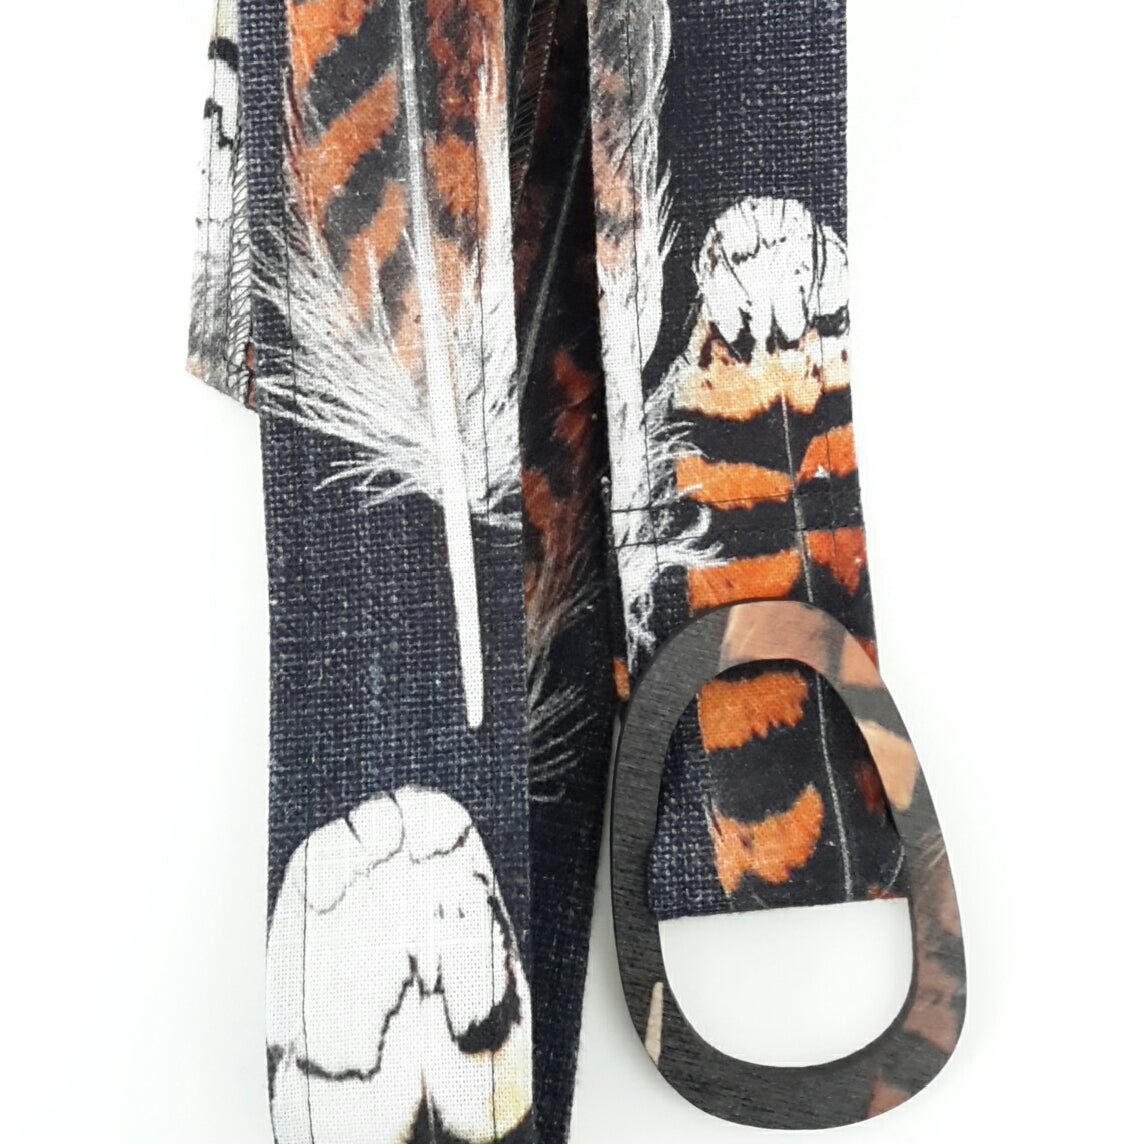 Tasmanian Oak Belts - Printed Organic Linen Belt Buckles The Spotted Quoll Kookaburra Feather Printed Tas Oak S - 110cm